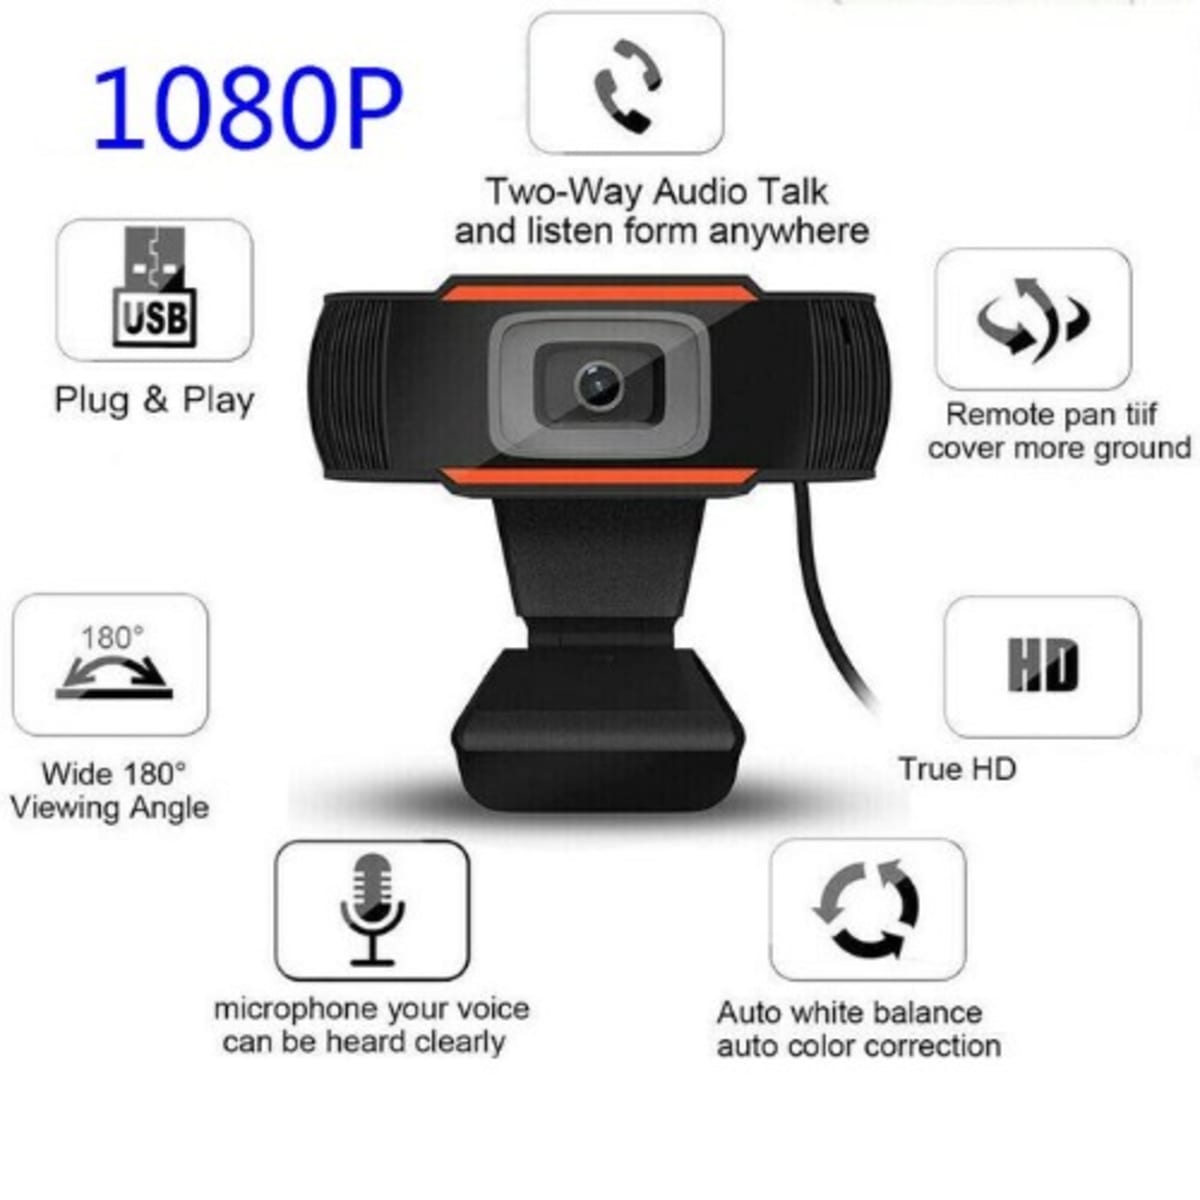 Full Hd 1080p USB Video Gamer Camera - Computer Web Cam Built-in Microphone